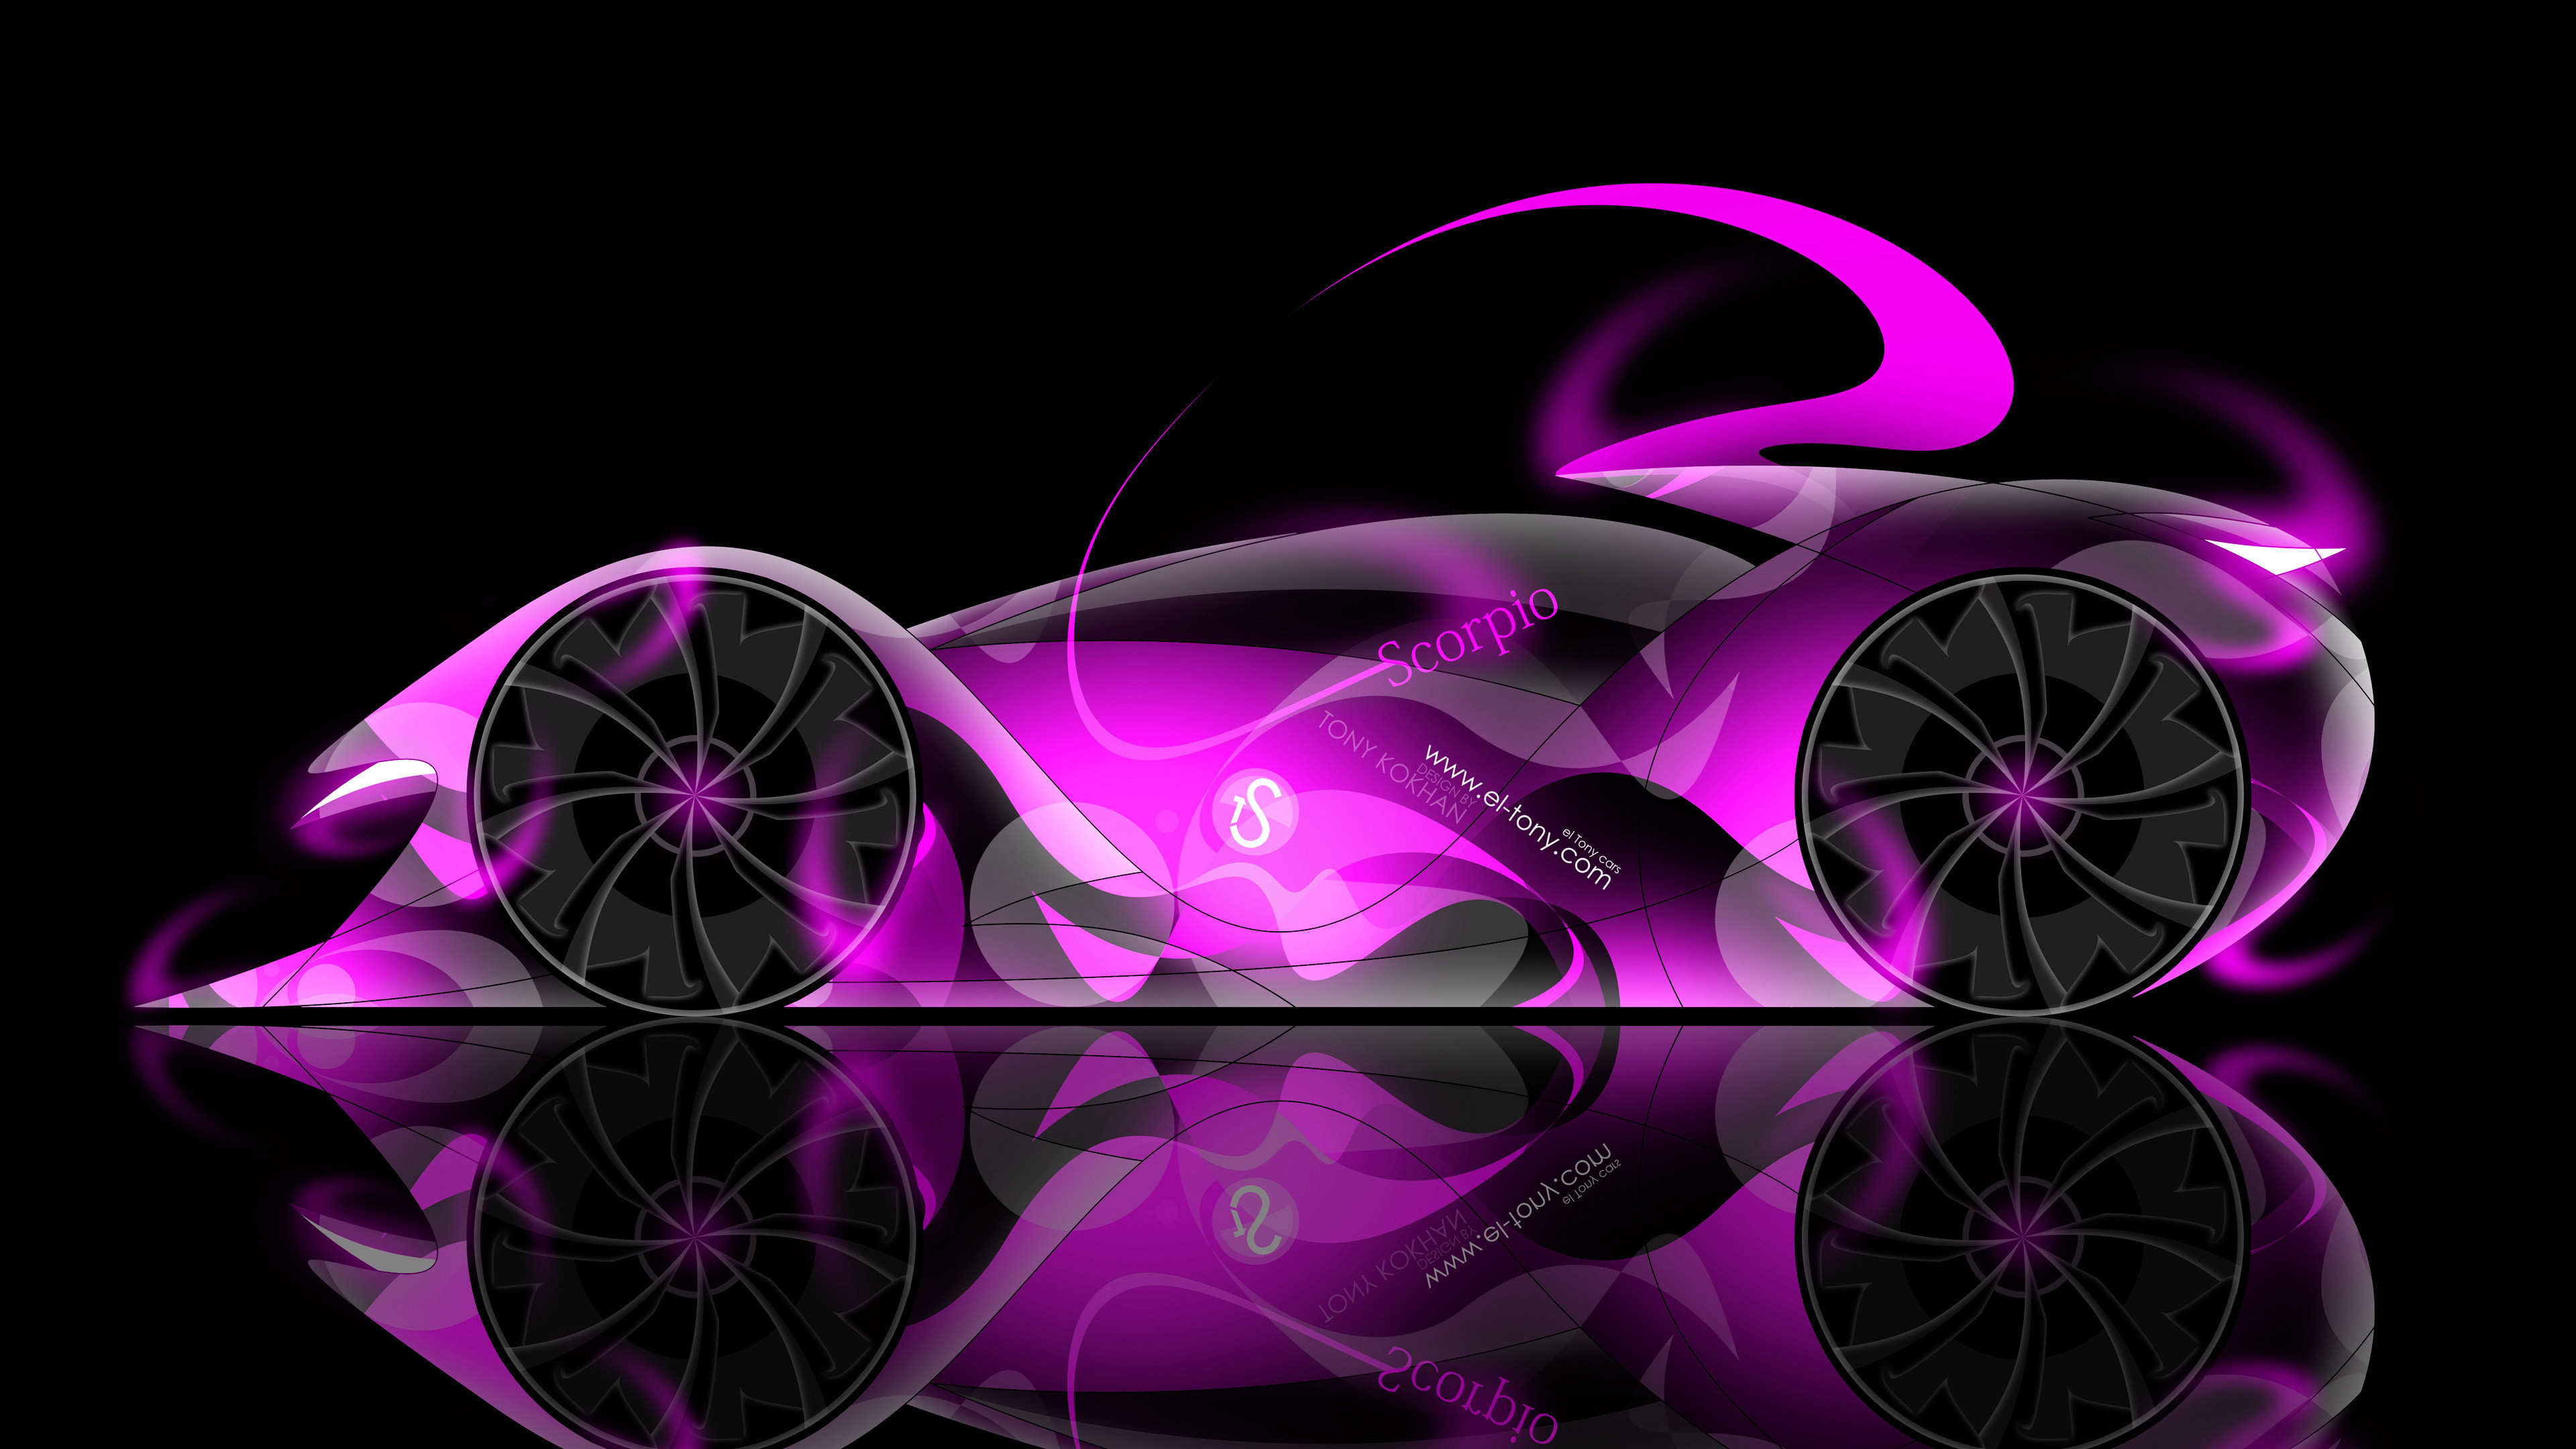 3840x2160 ... Tony-Style-Scorpio-Abstract-Neon-Car-2015-Pink- ...